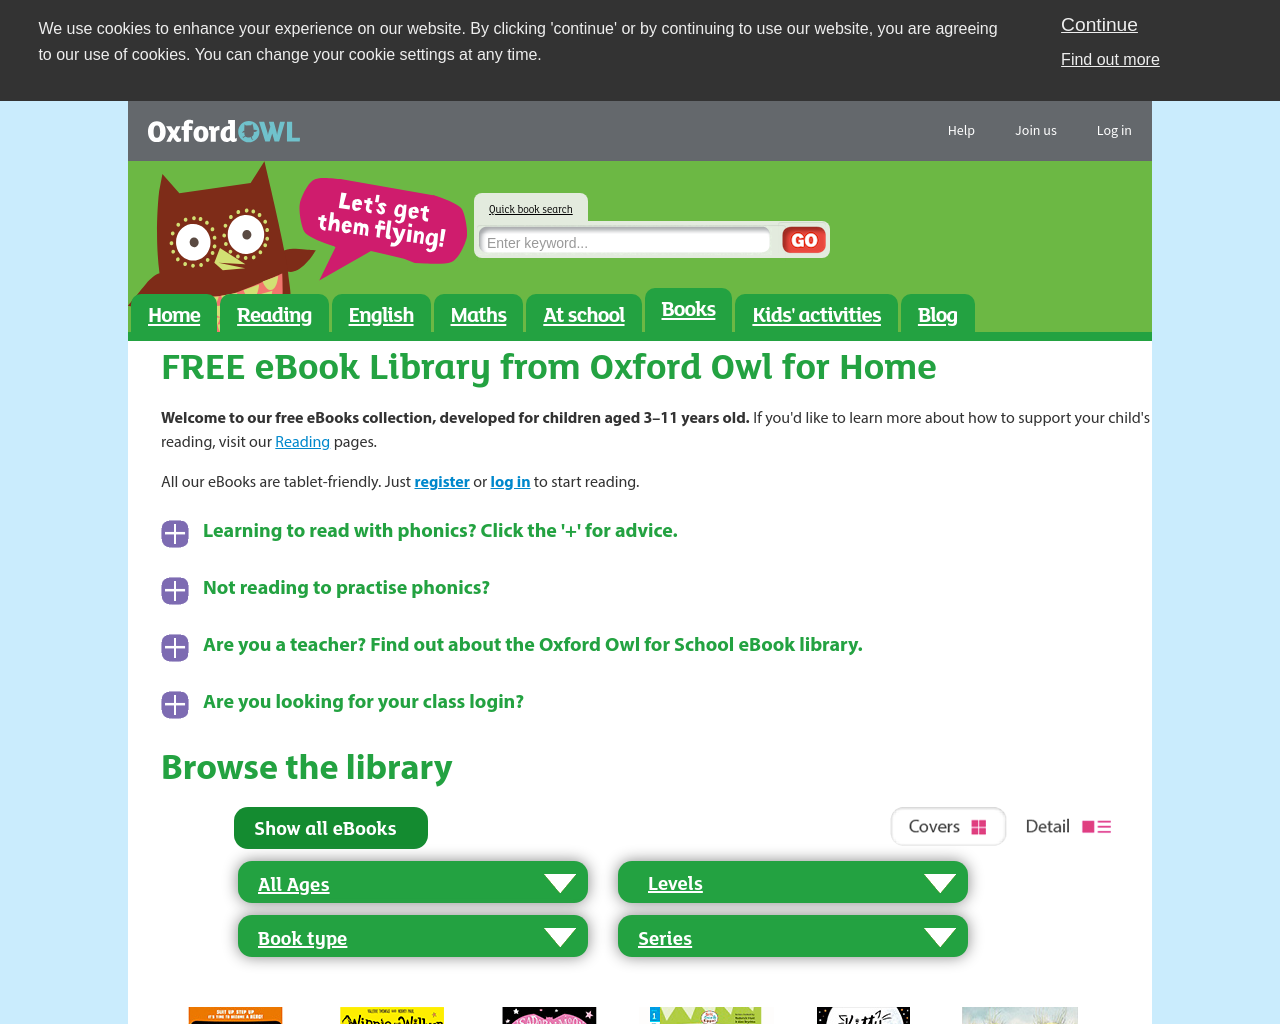 Oxford Reading Tree eBooks